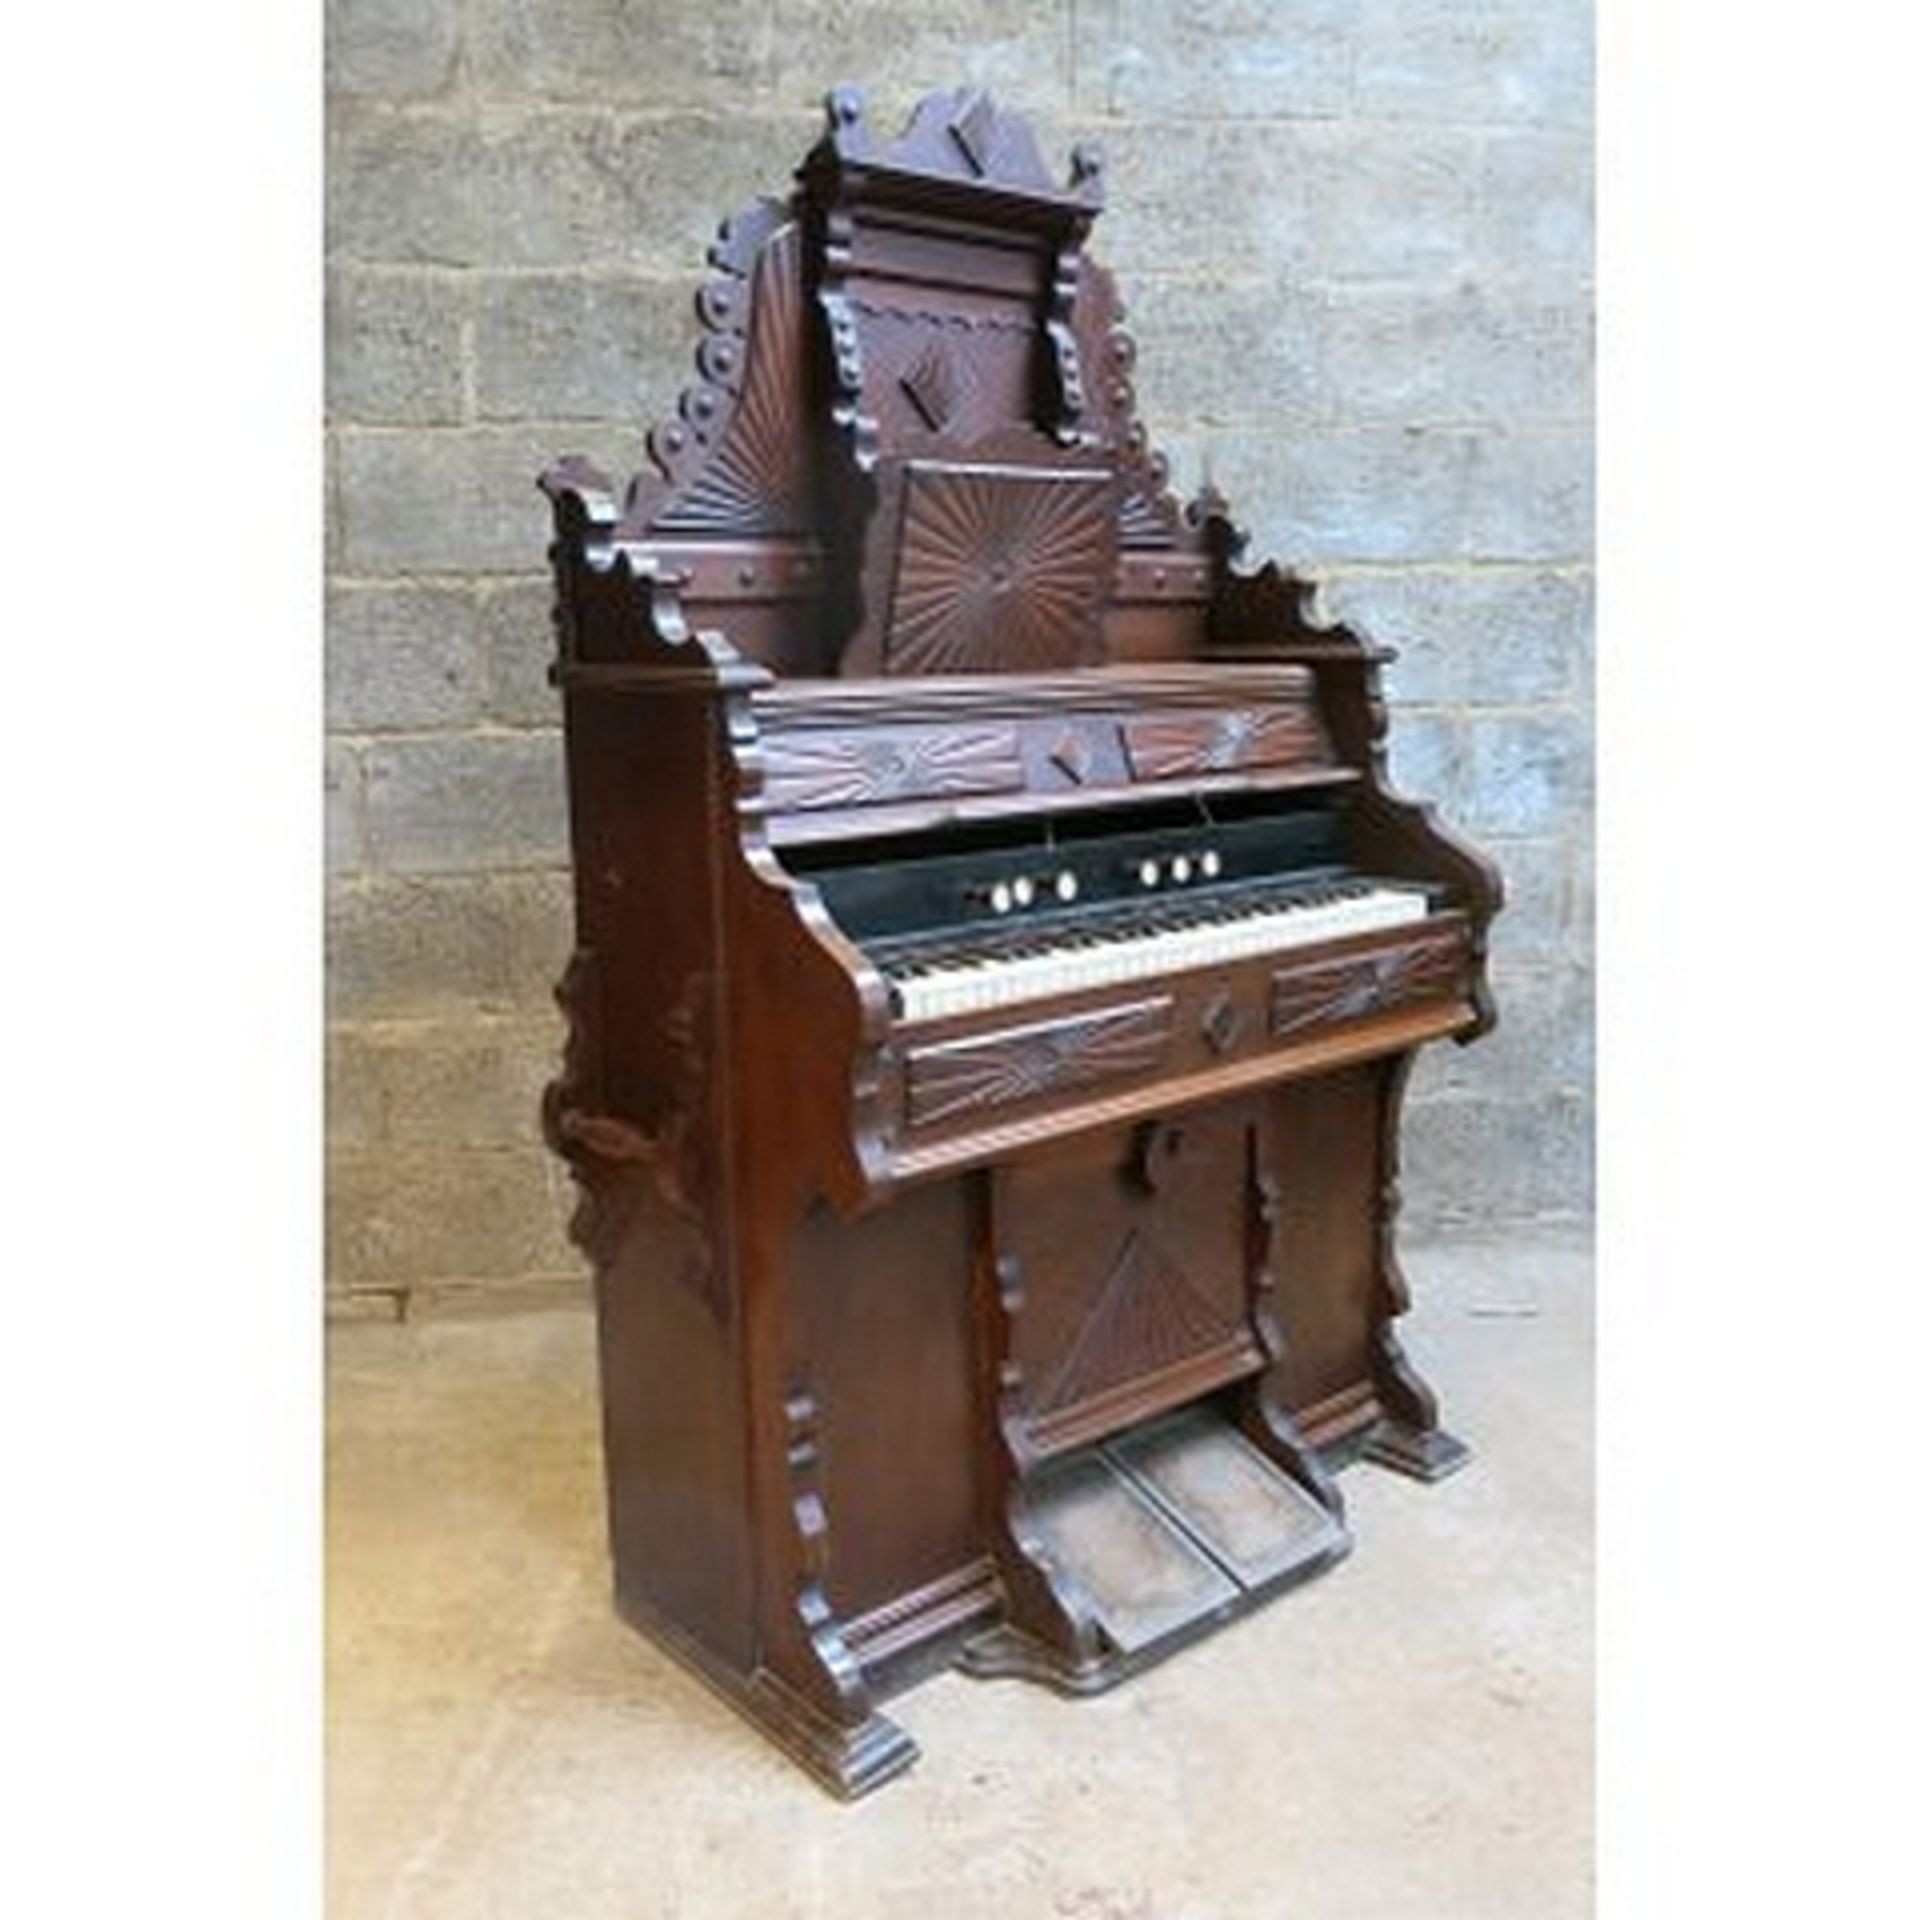 Harmonium/Organ Victorian